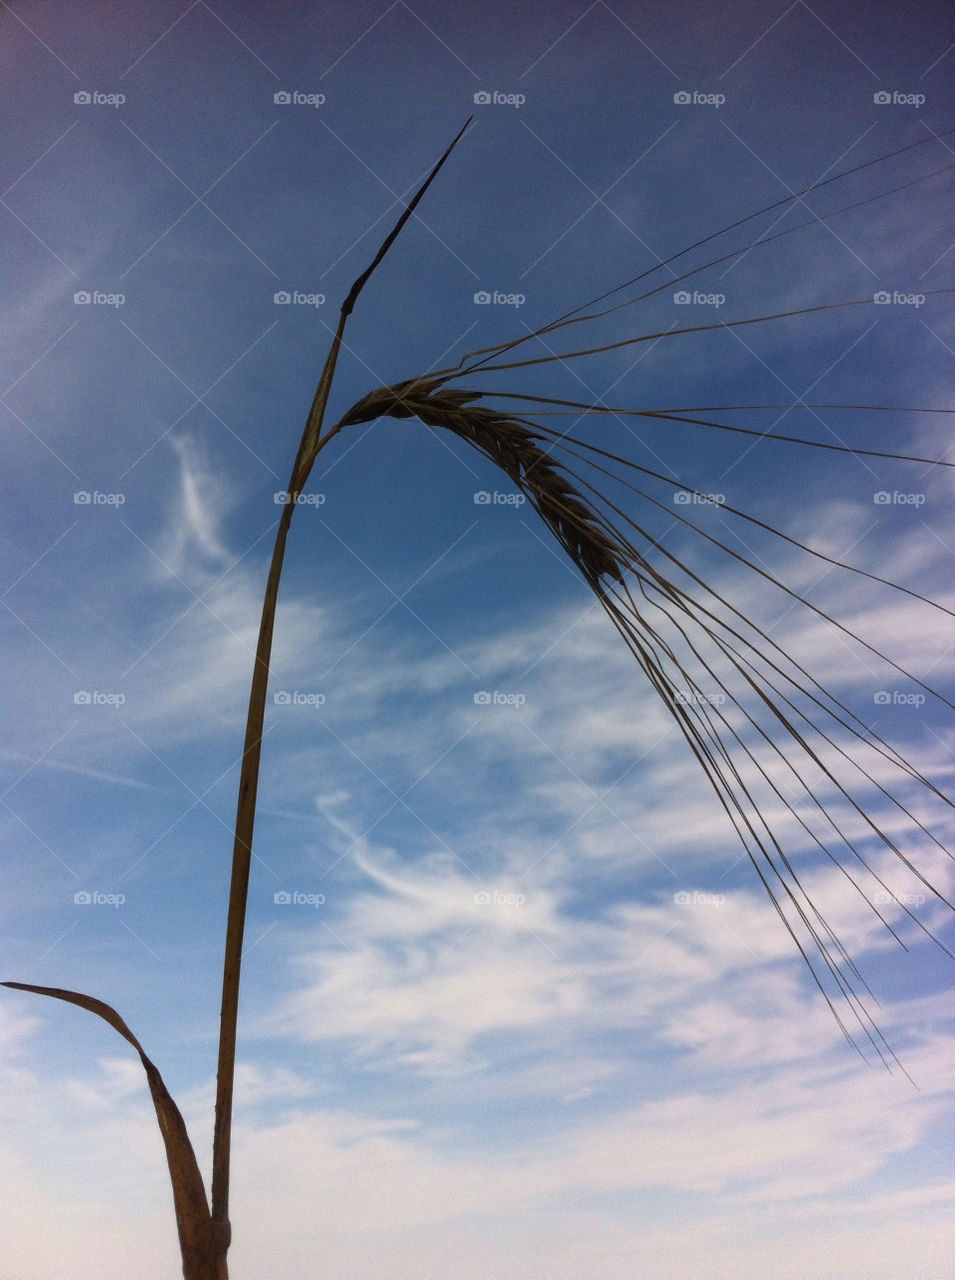 straw harvest crop barley by beanzy